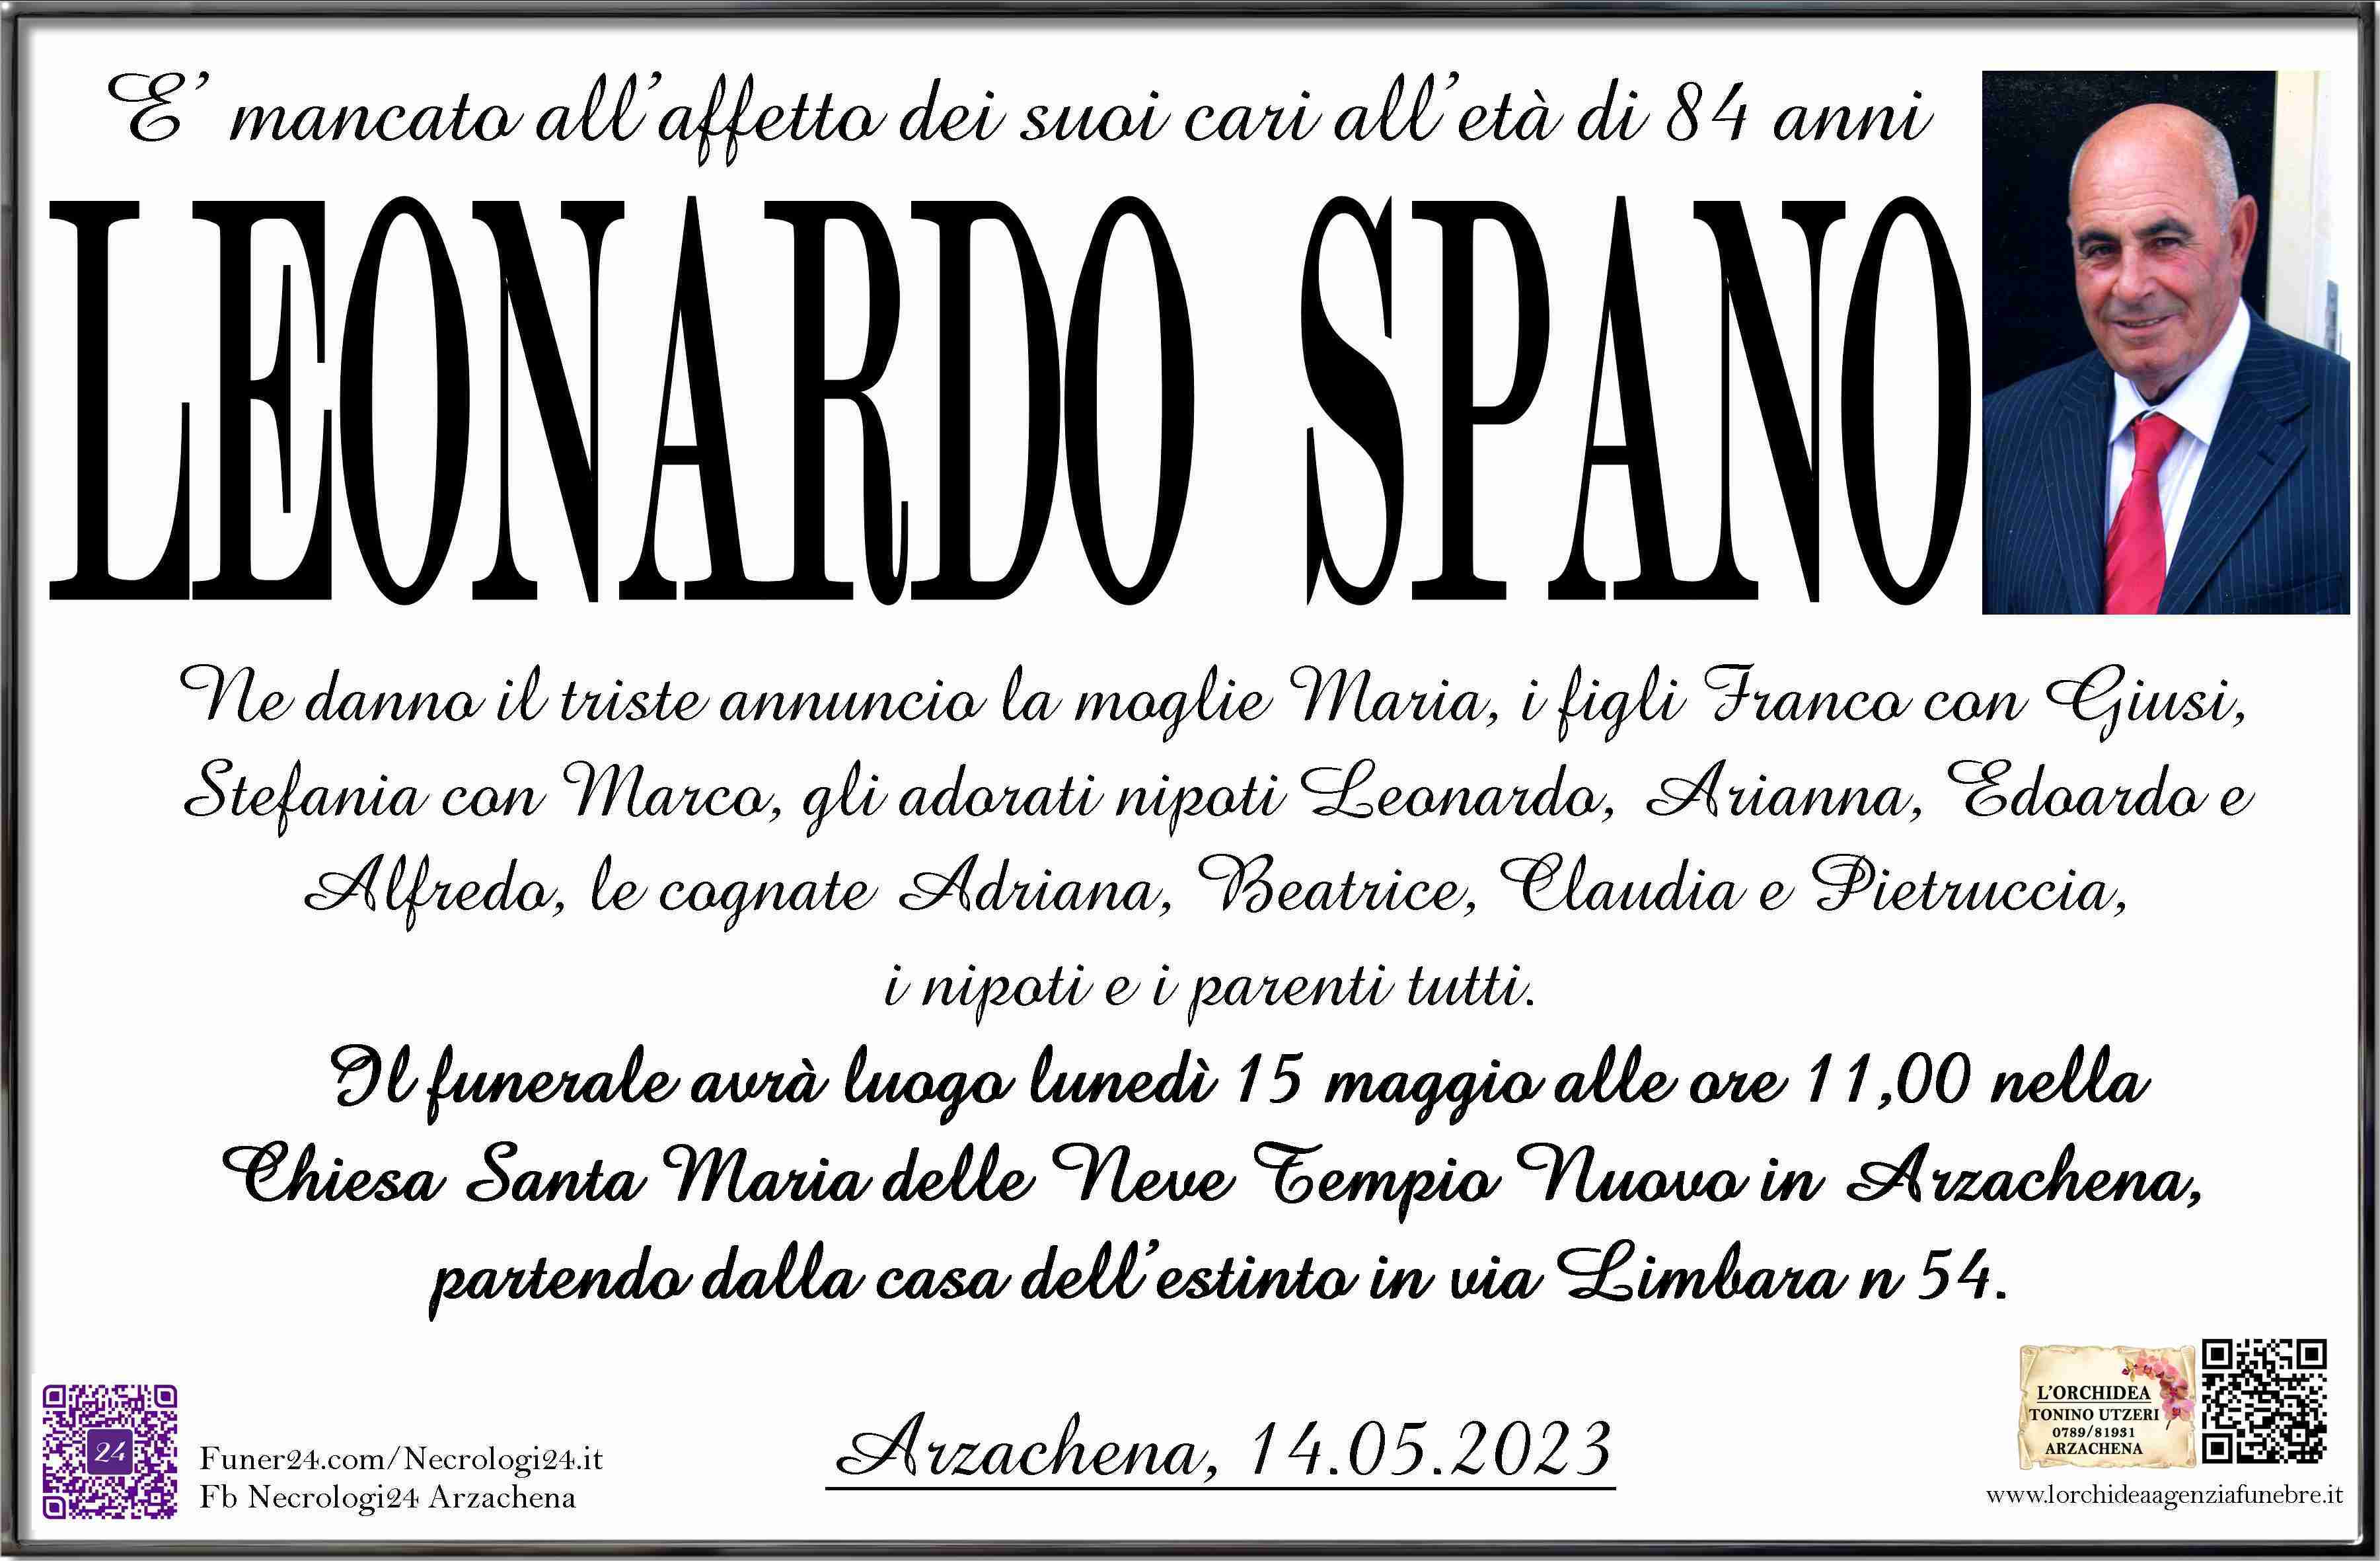 Leonardo Spano